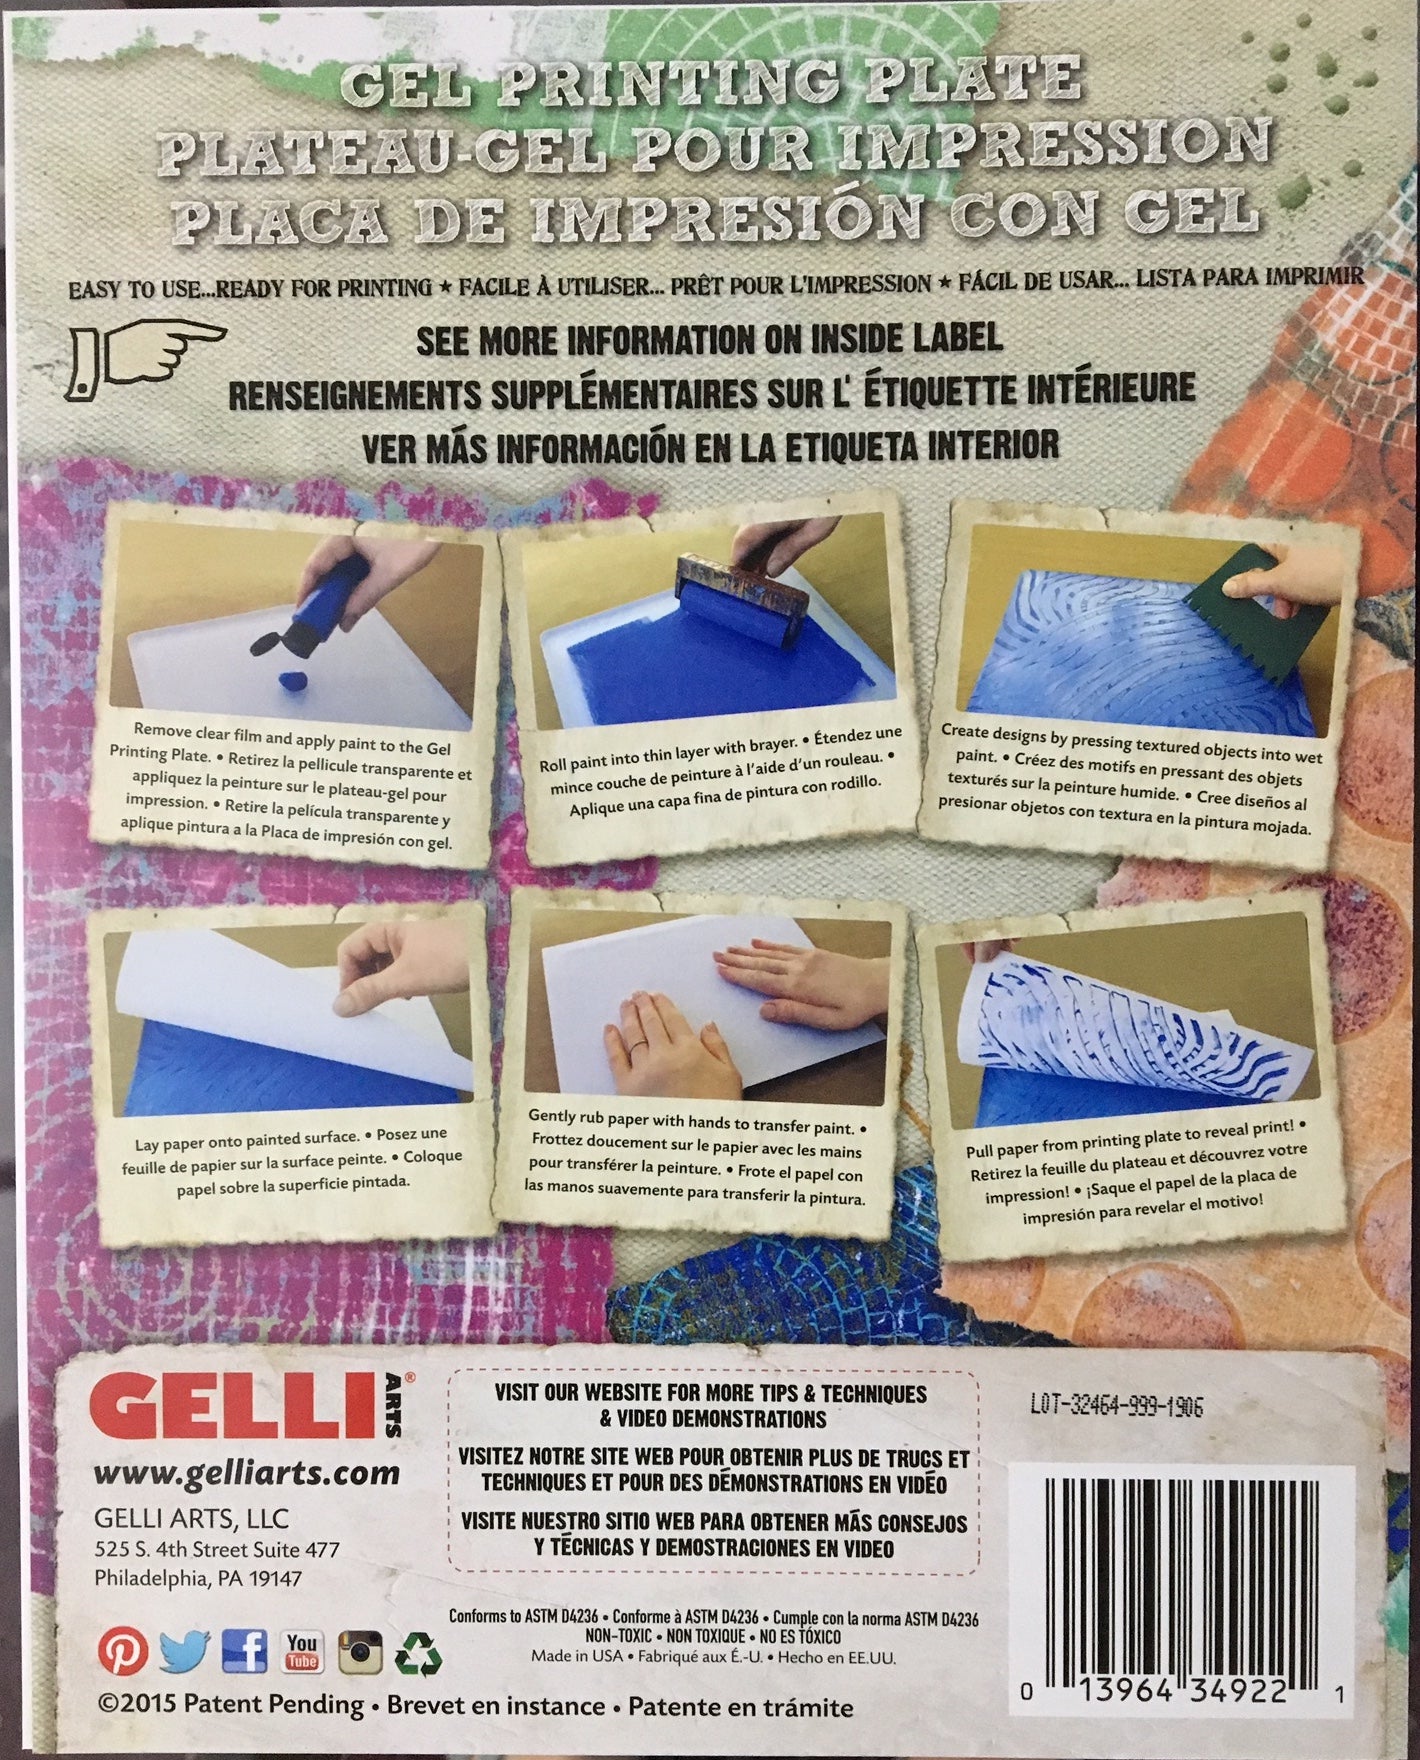 STENCIL MASK | Queen Anne’s Lace | Gel Plate Printing tool | Gelli Plate |  Print making | Fits 8x10” Gelli Plate | Yupo Plastic